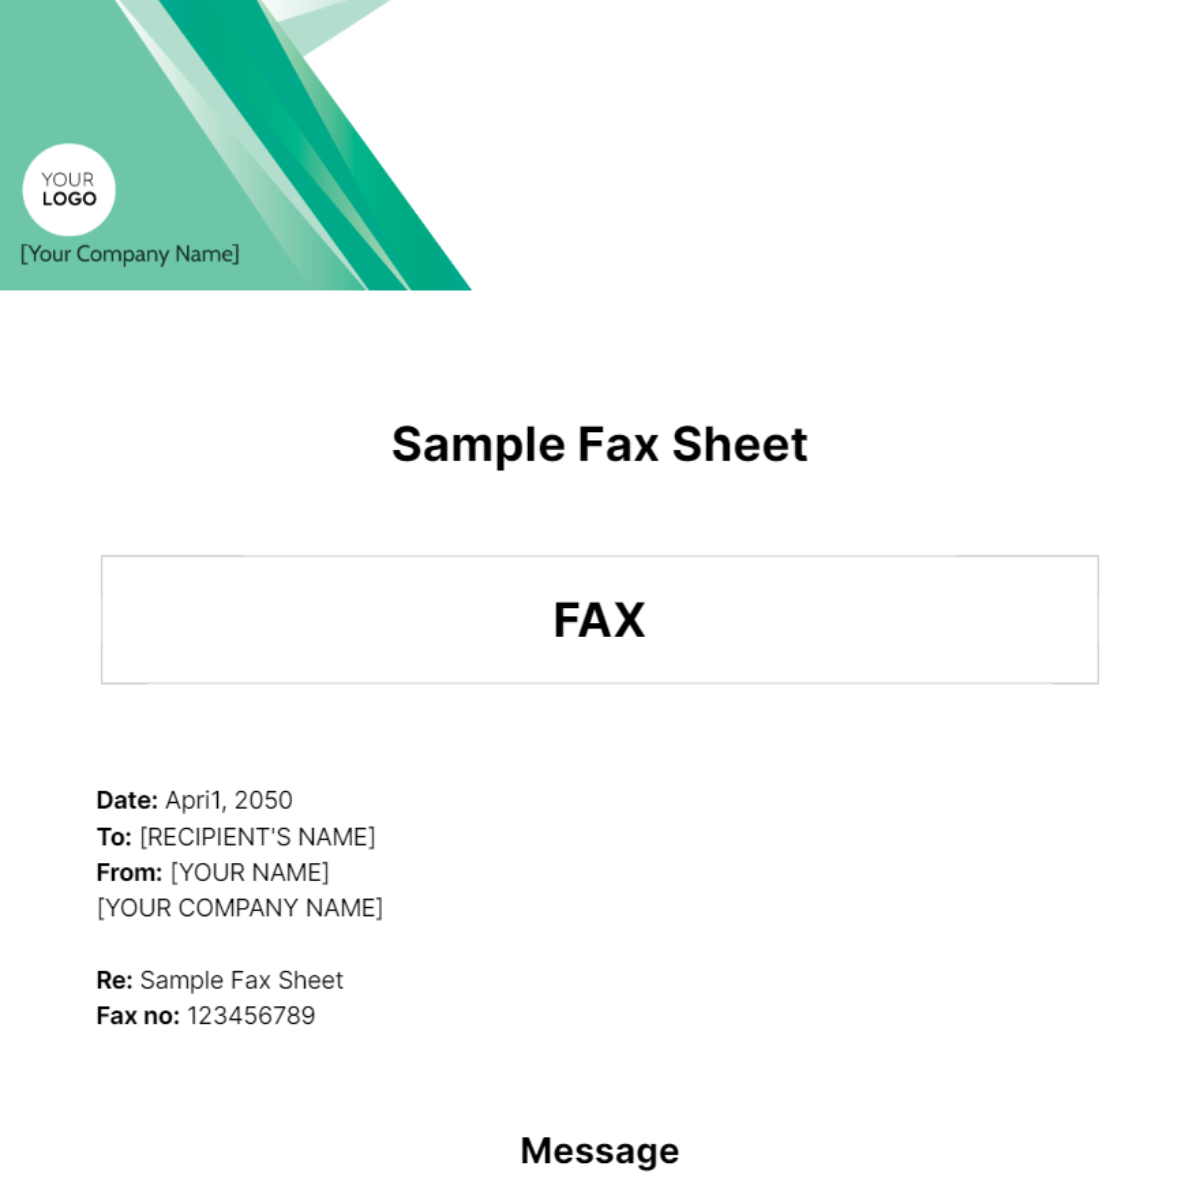 Sample Fax Sheet